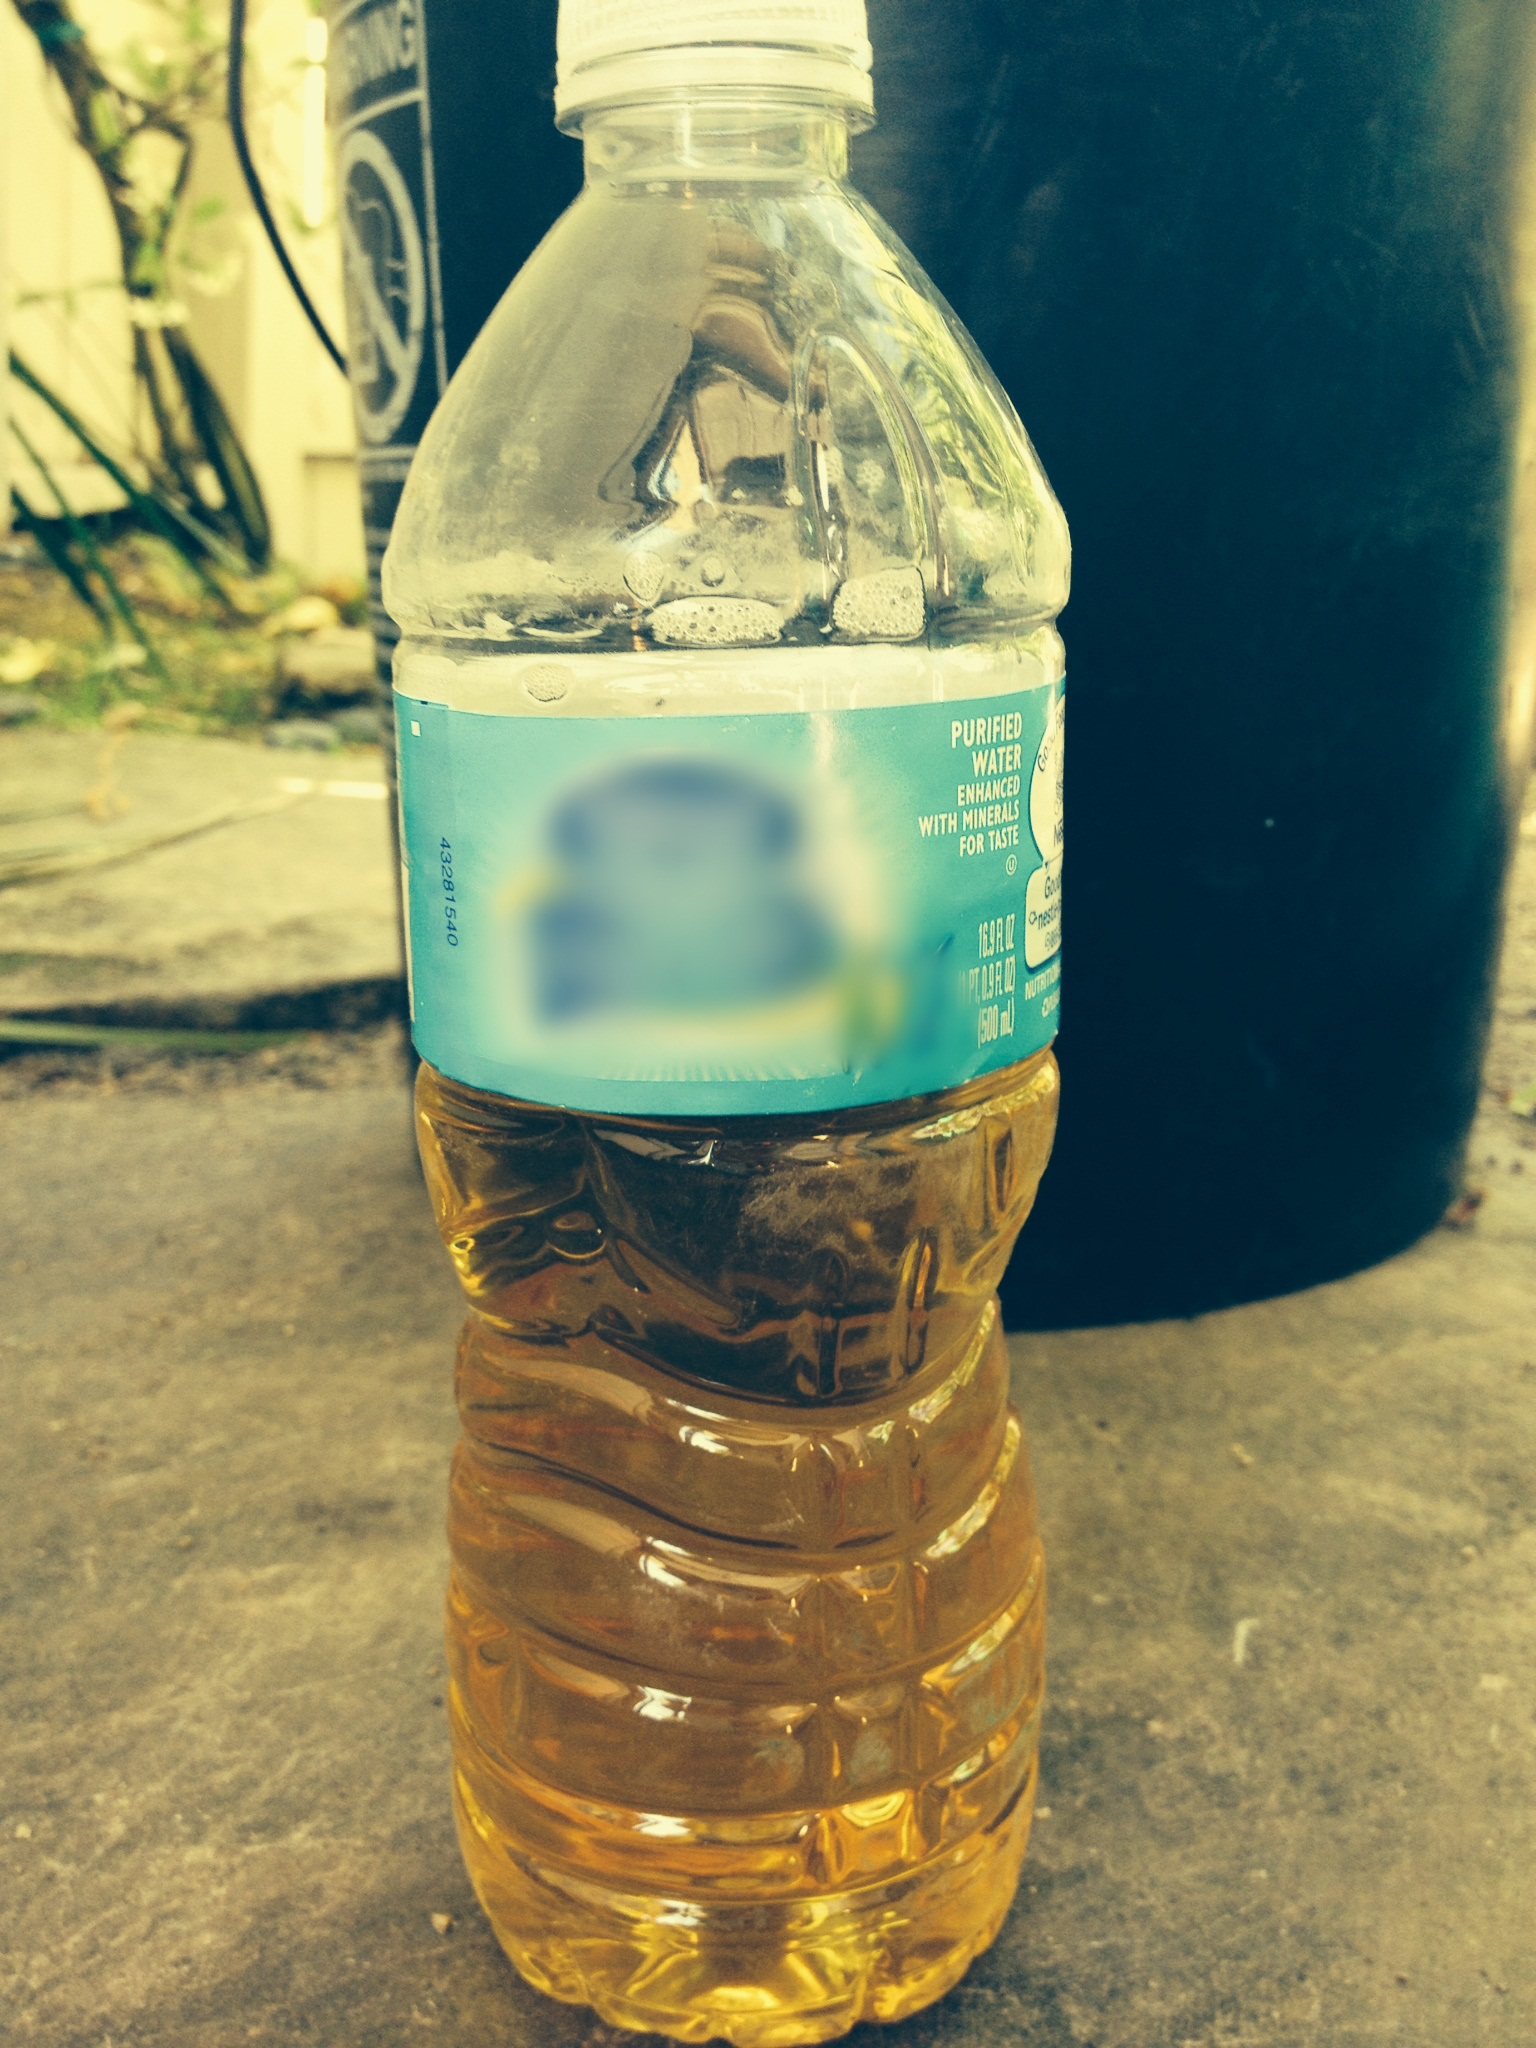 amazon delivers bottle of urine